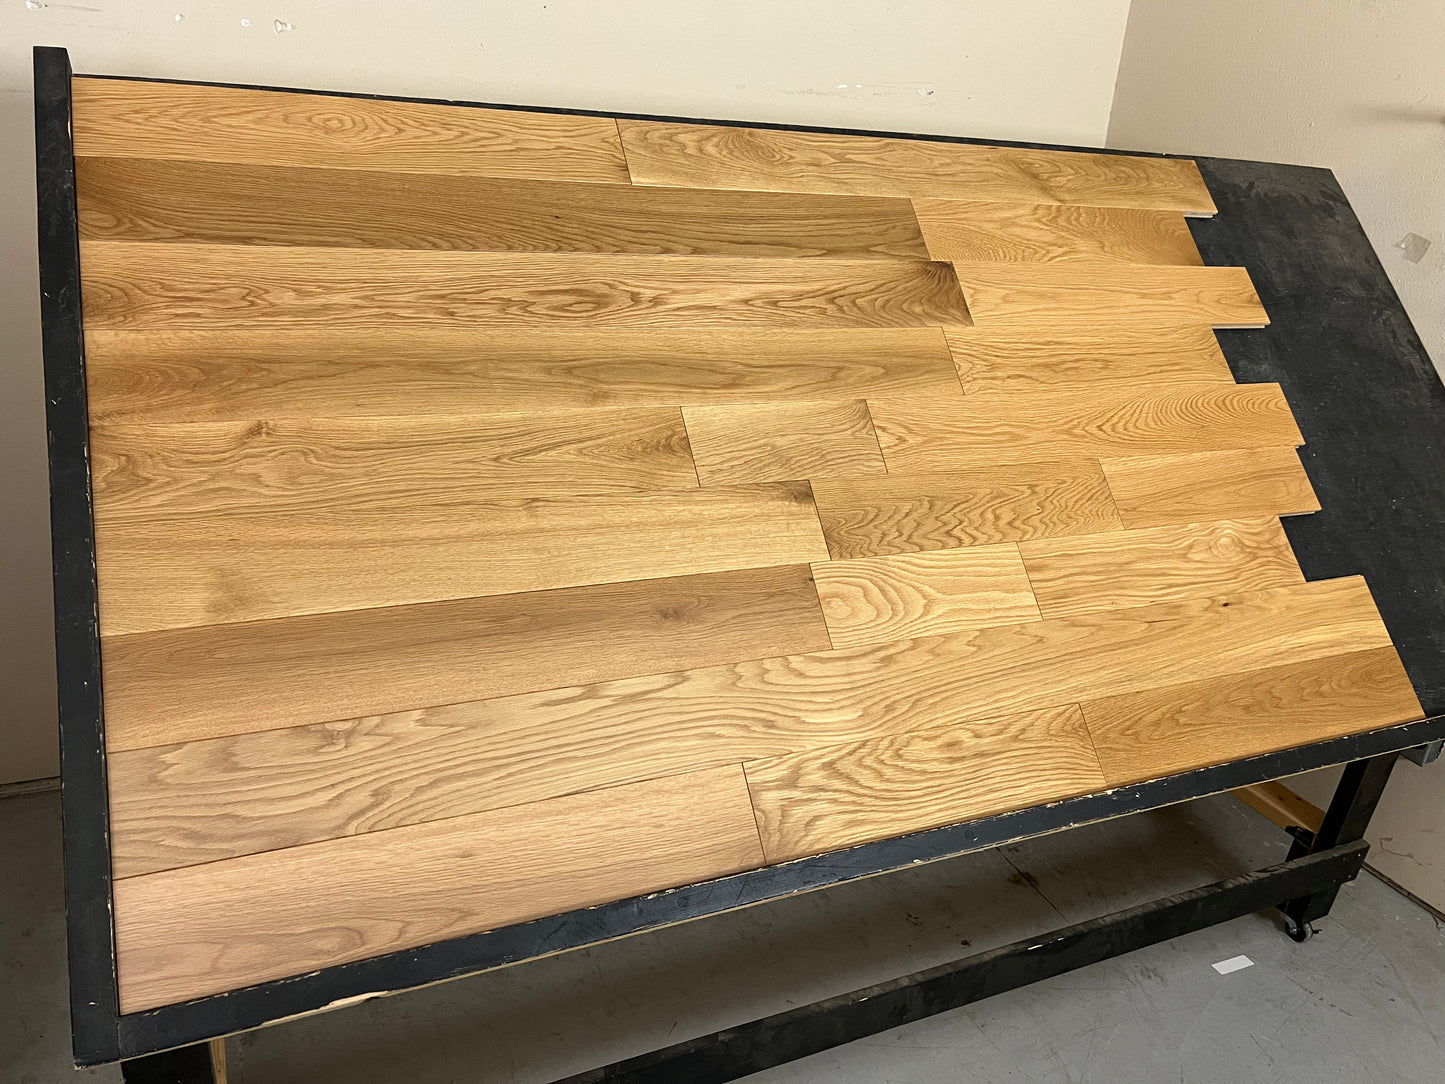 5" x 3/4" Solid White Oak Natural Hardwood Flooring